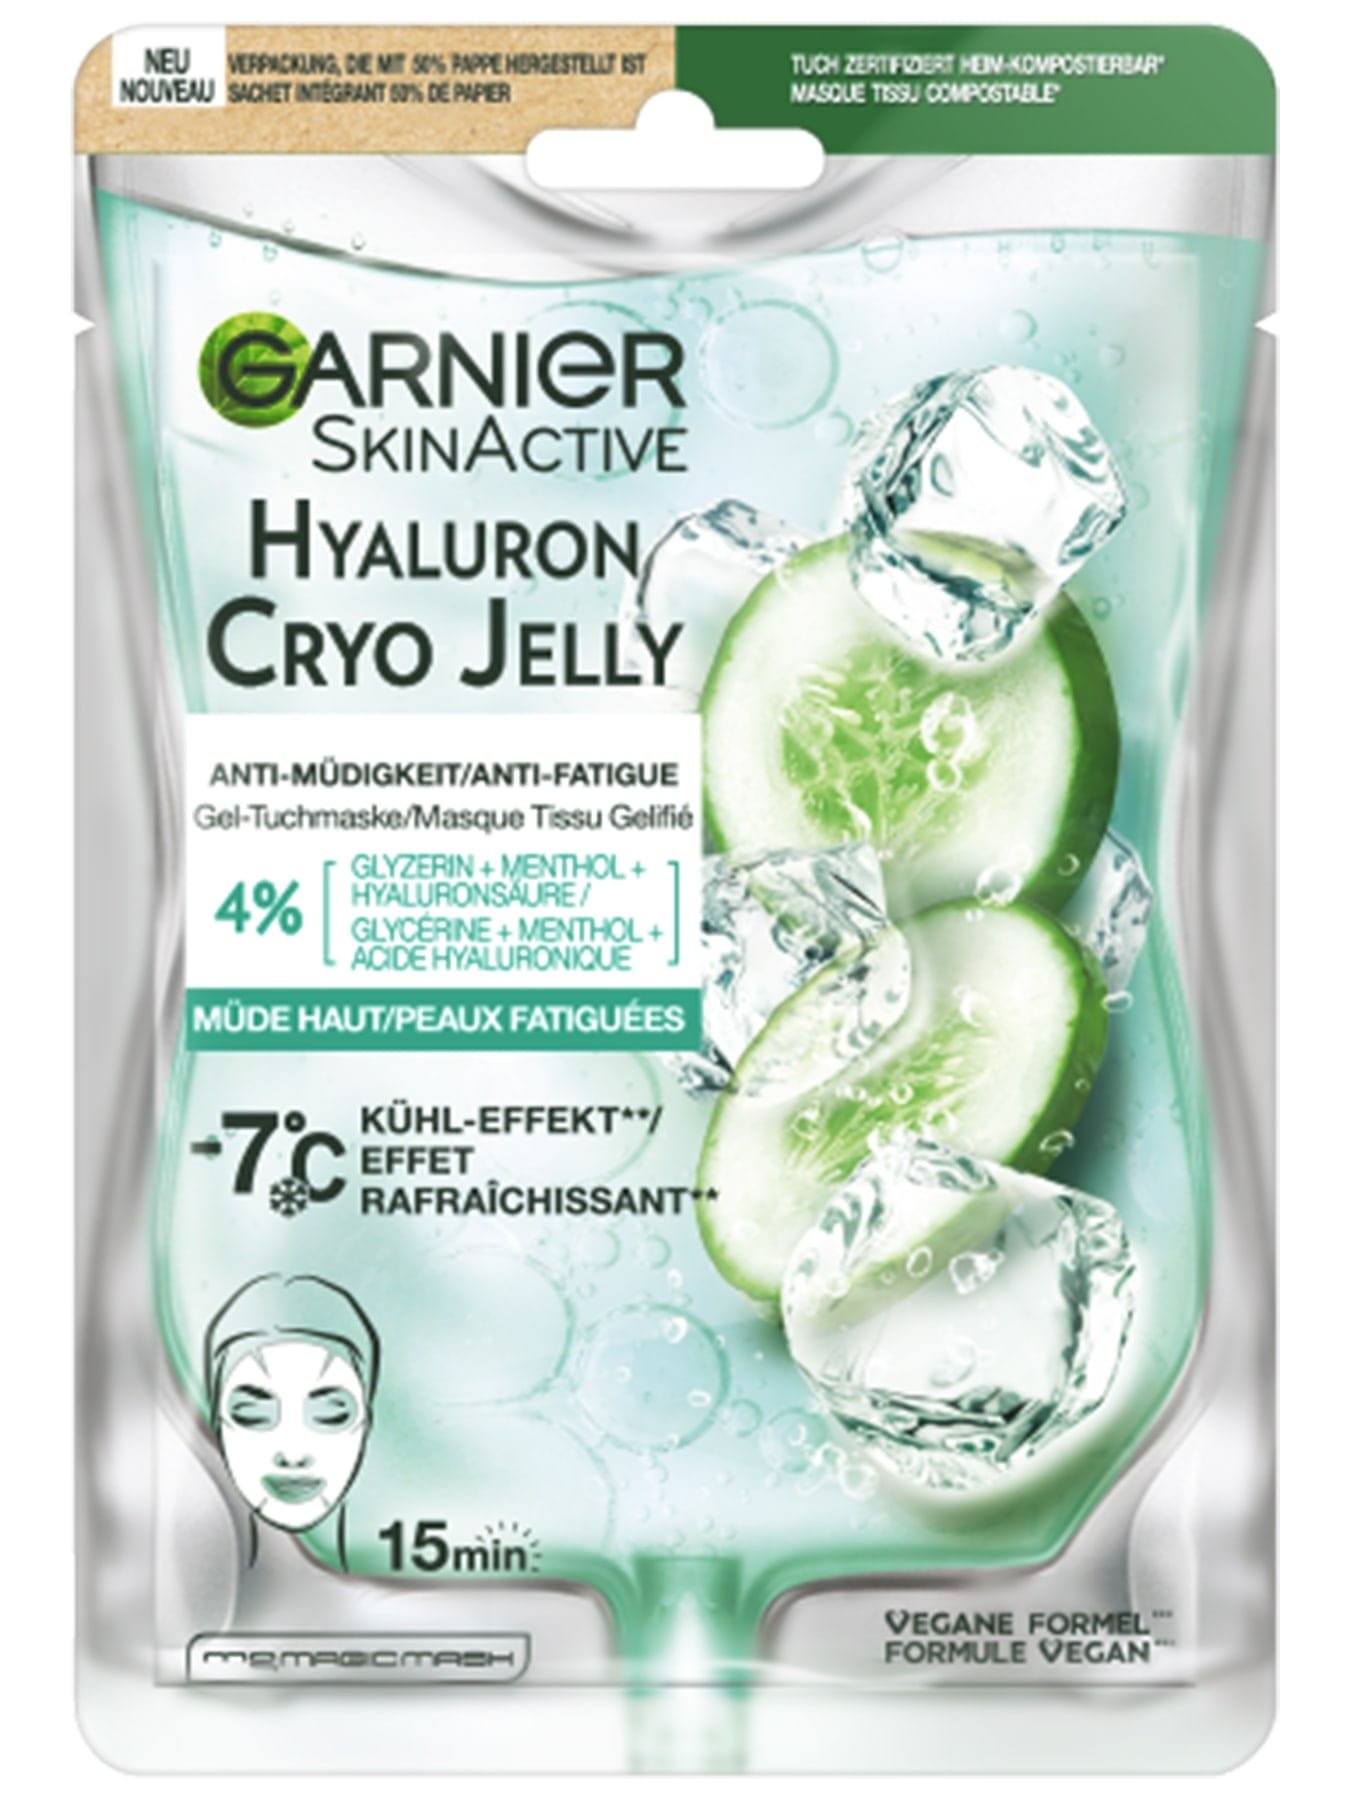 Hyaluron Cryo Jelly Anti-Müdigkeit Gel-Tuchmaske Garnier 